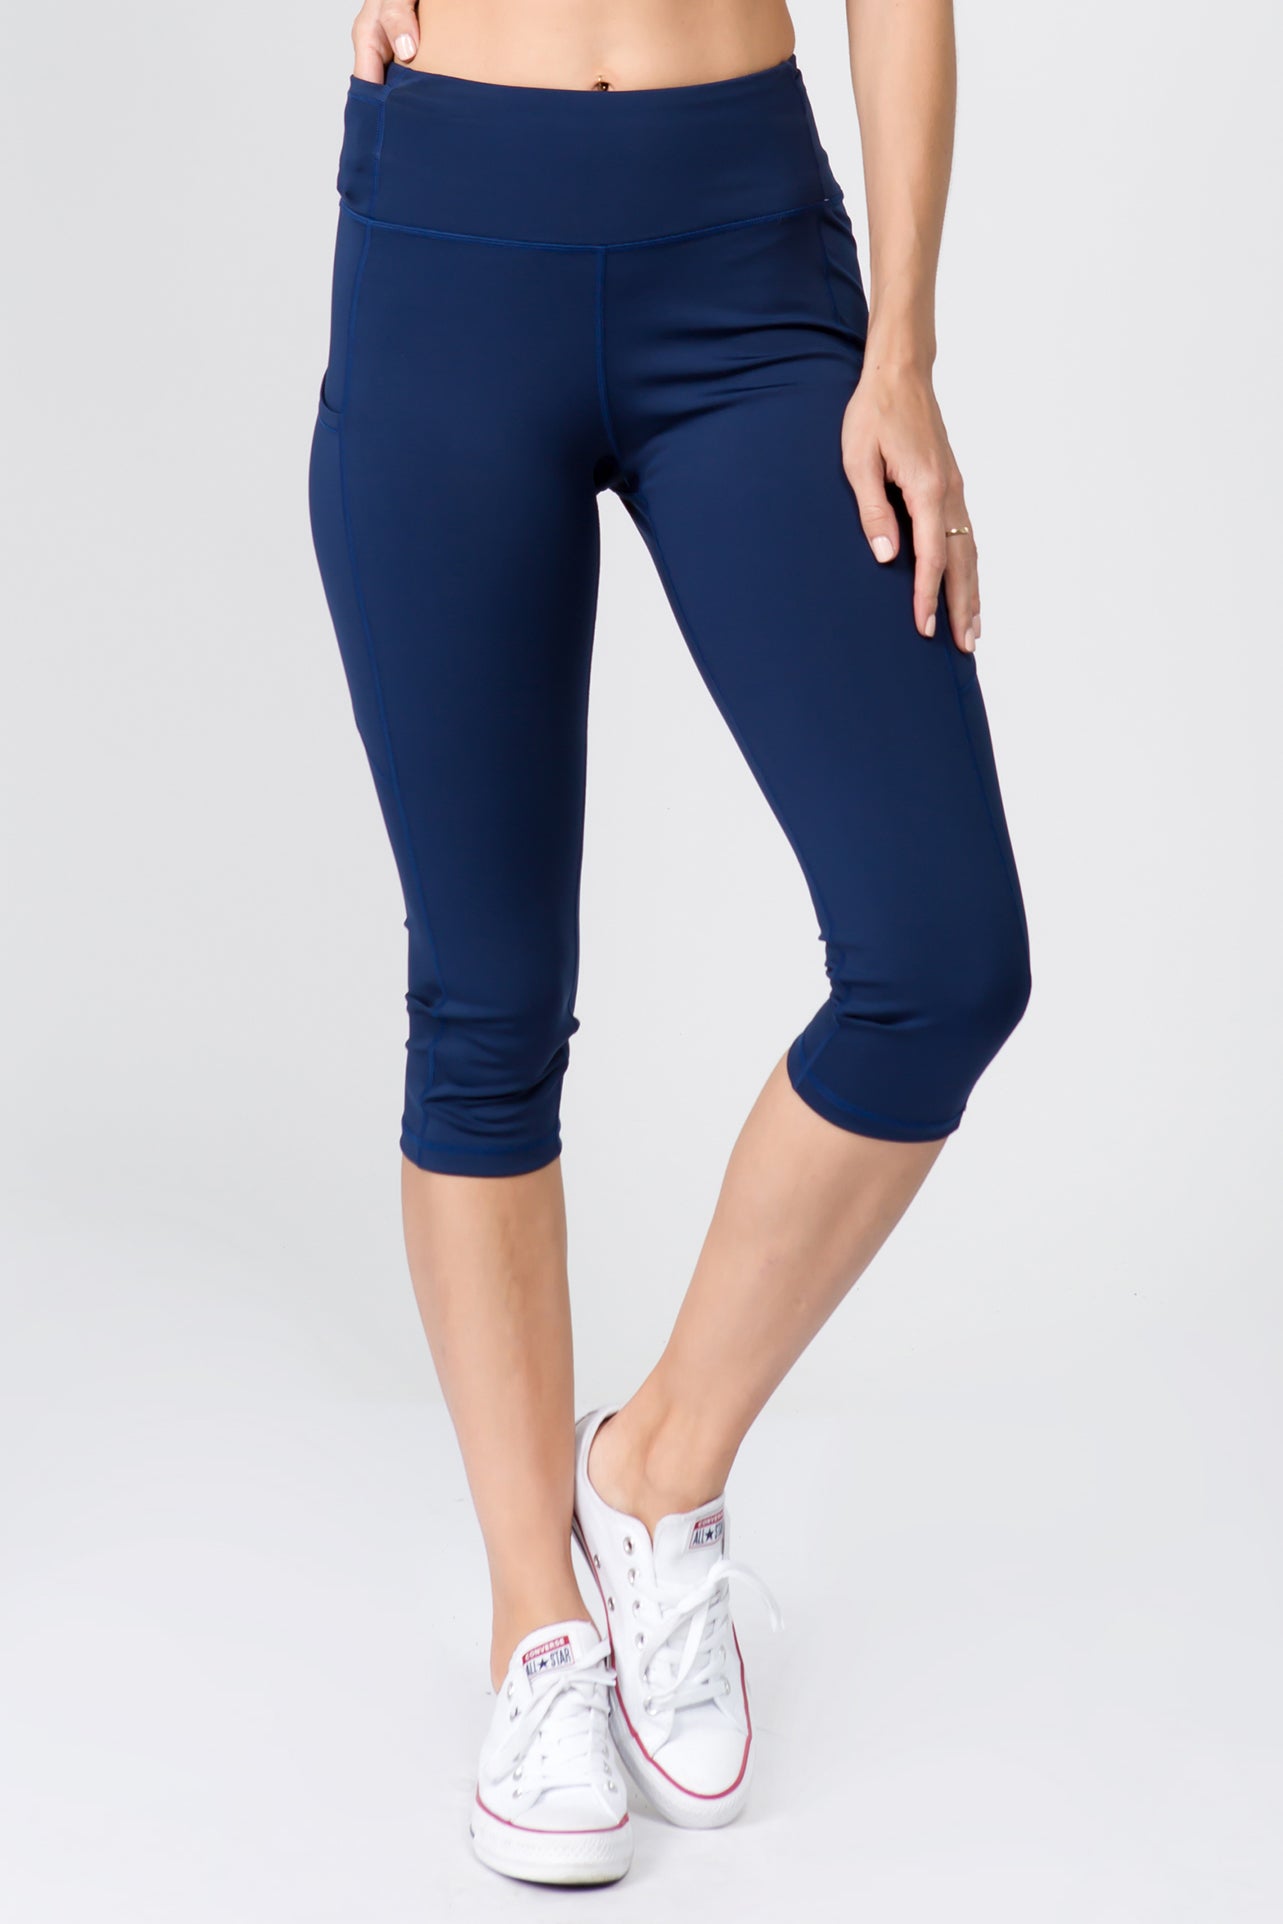 NEW BALANCE DRY Women Capri legging Side Pocket Extra Small BLUE Running XS  NWT